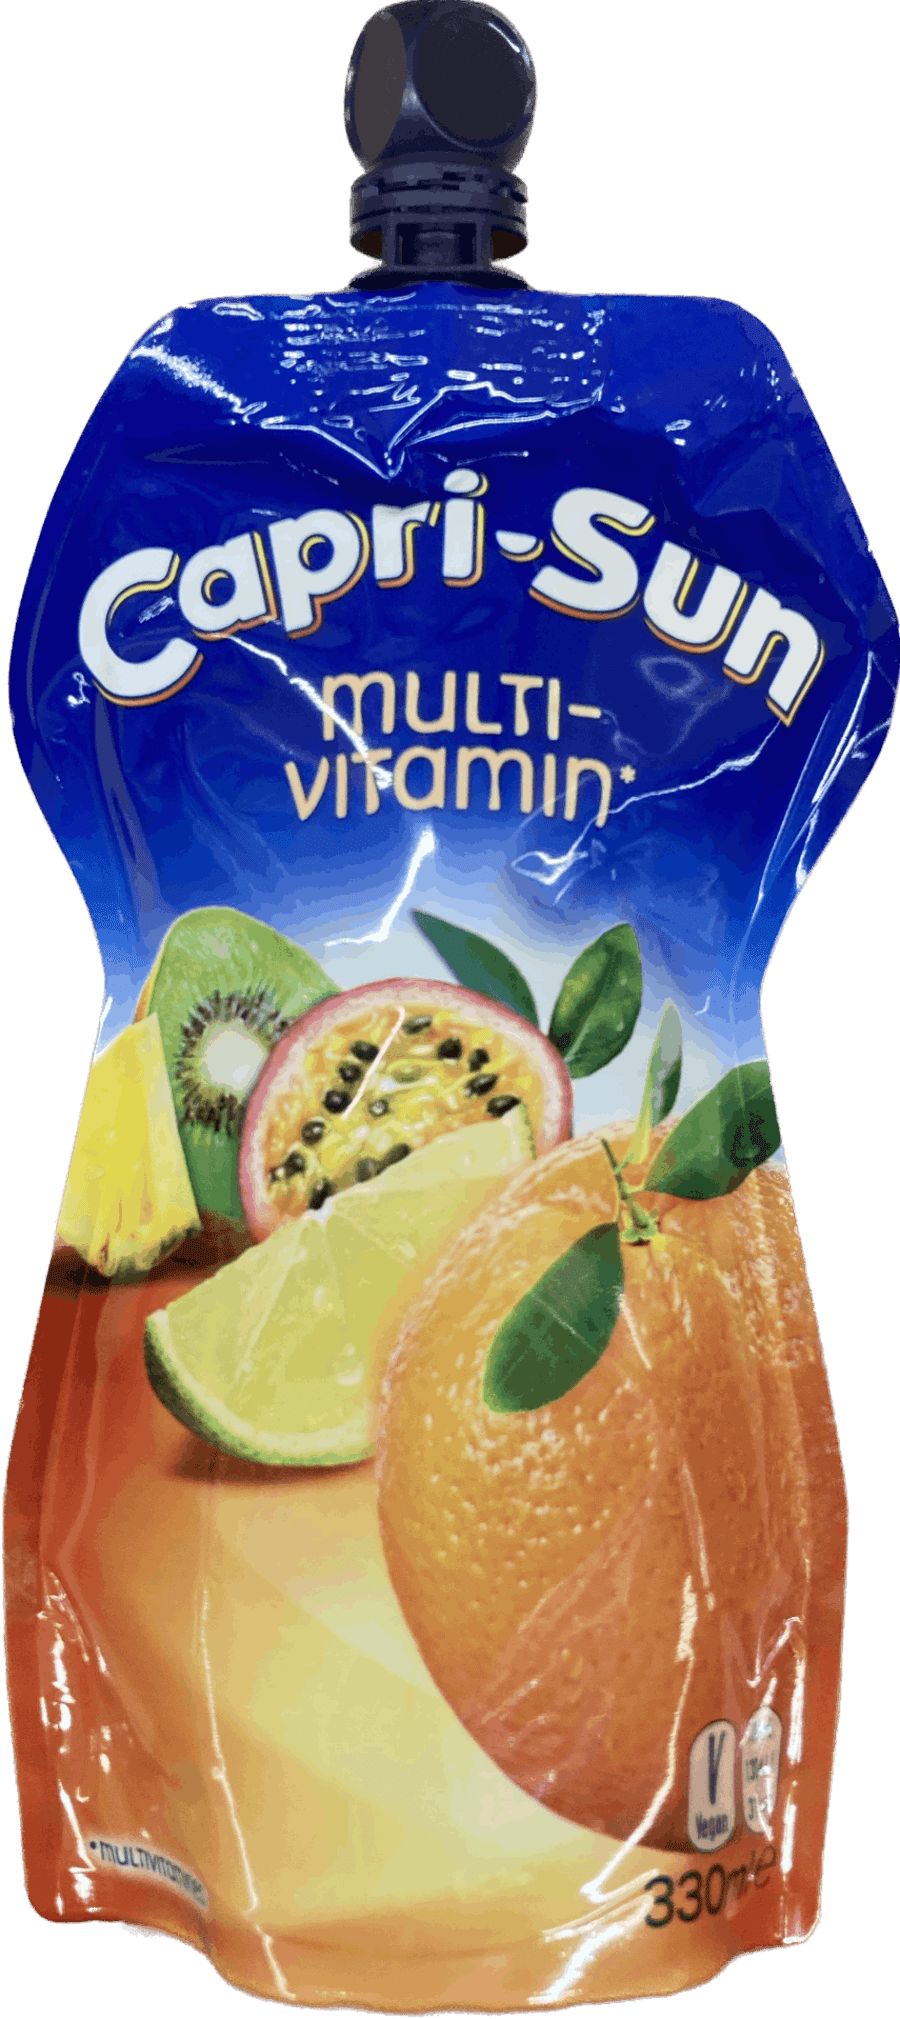 Capri-sun multi-vitamin 330 ml